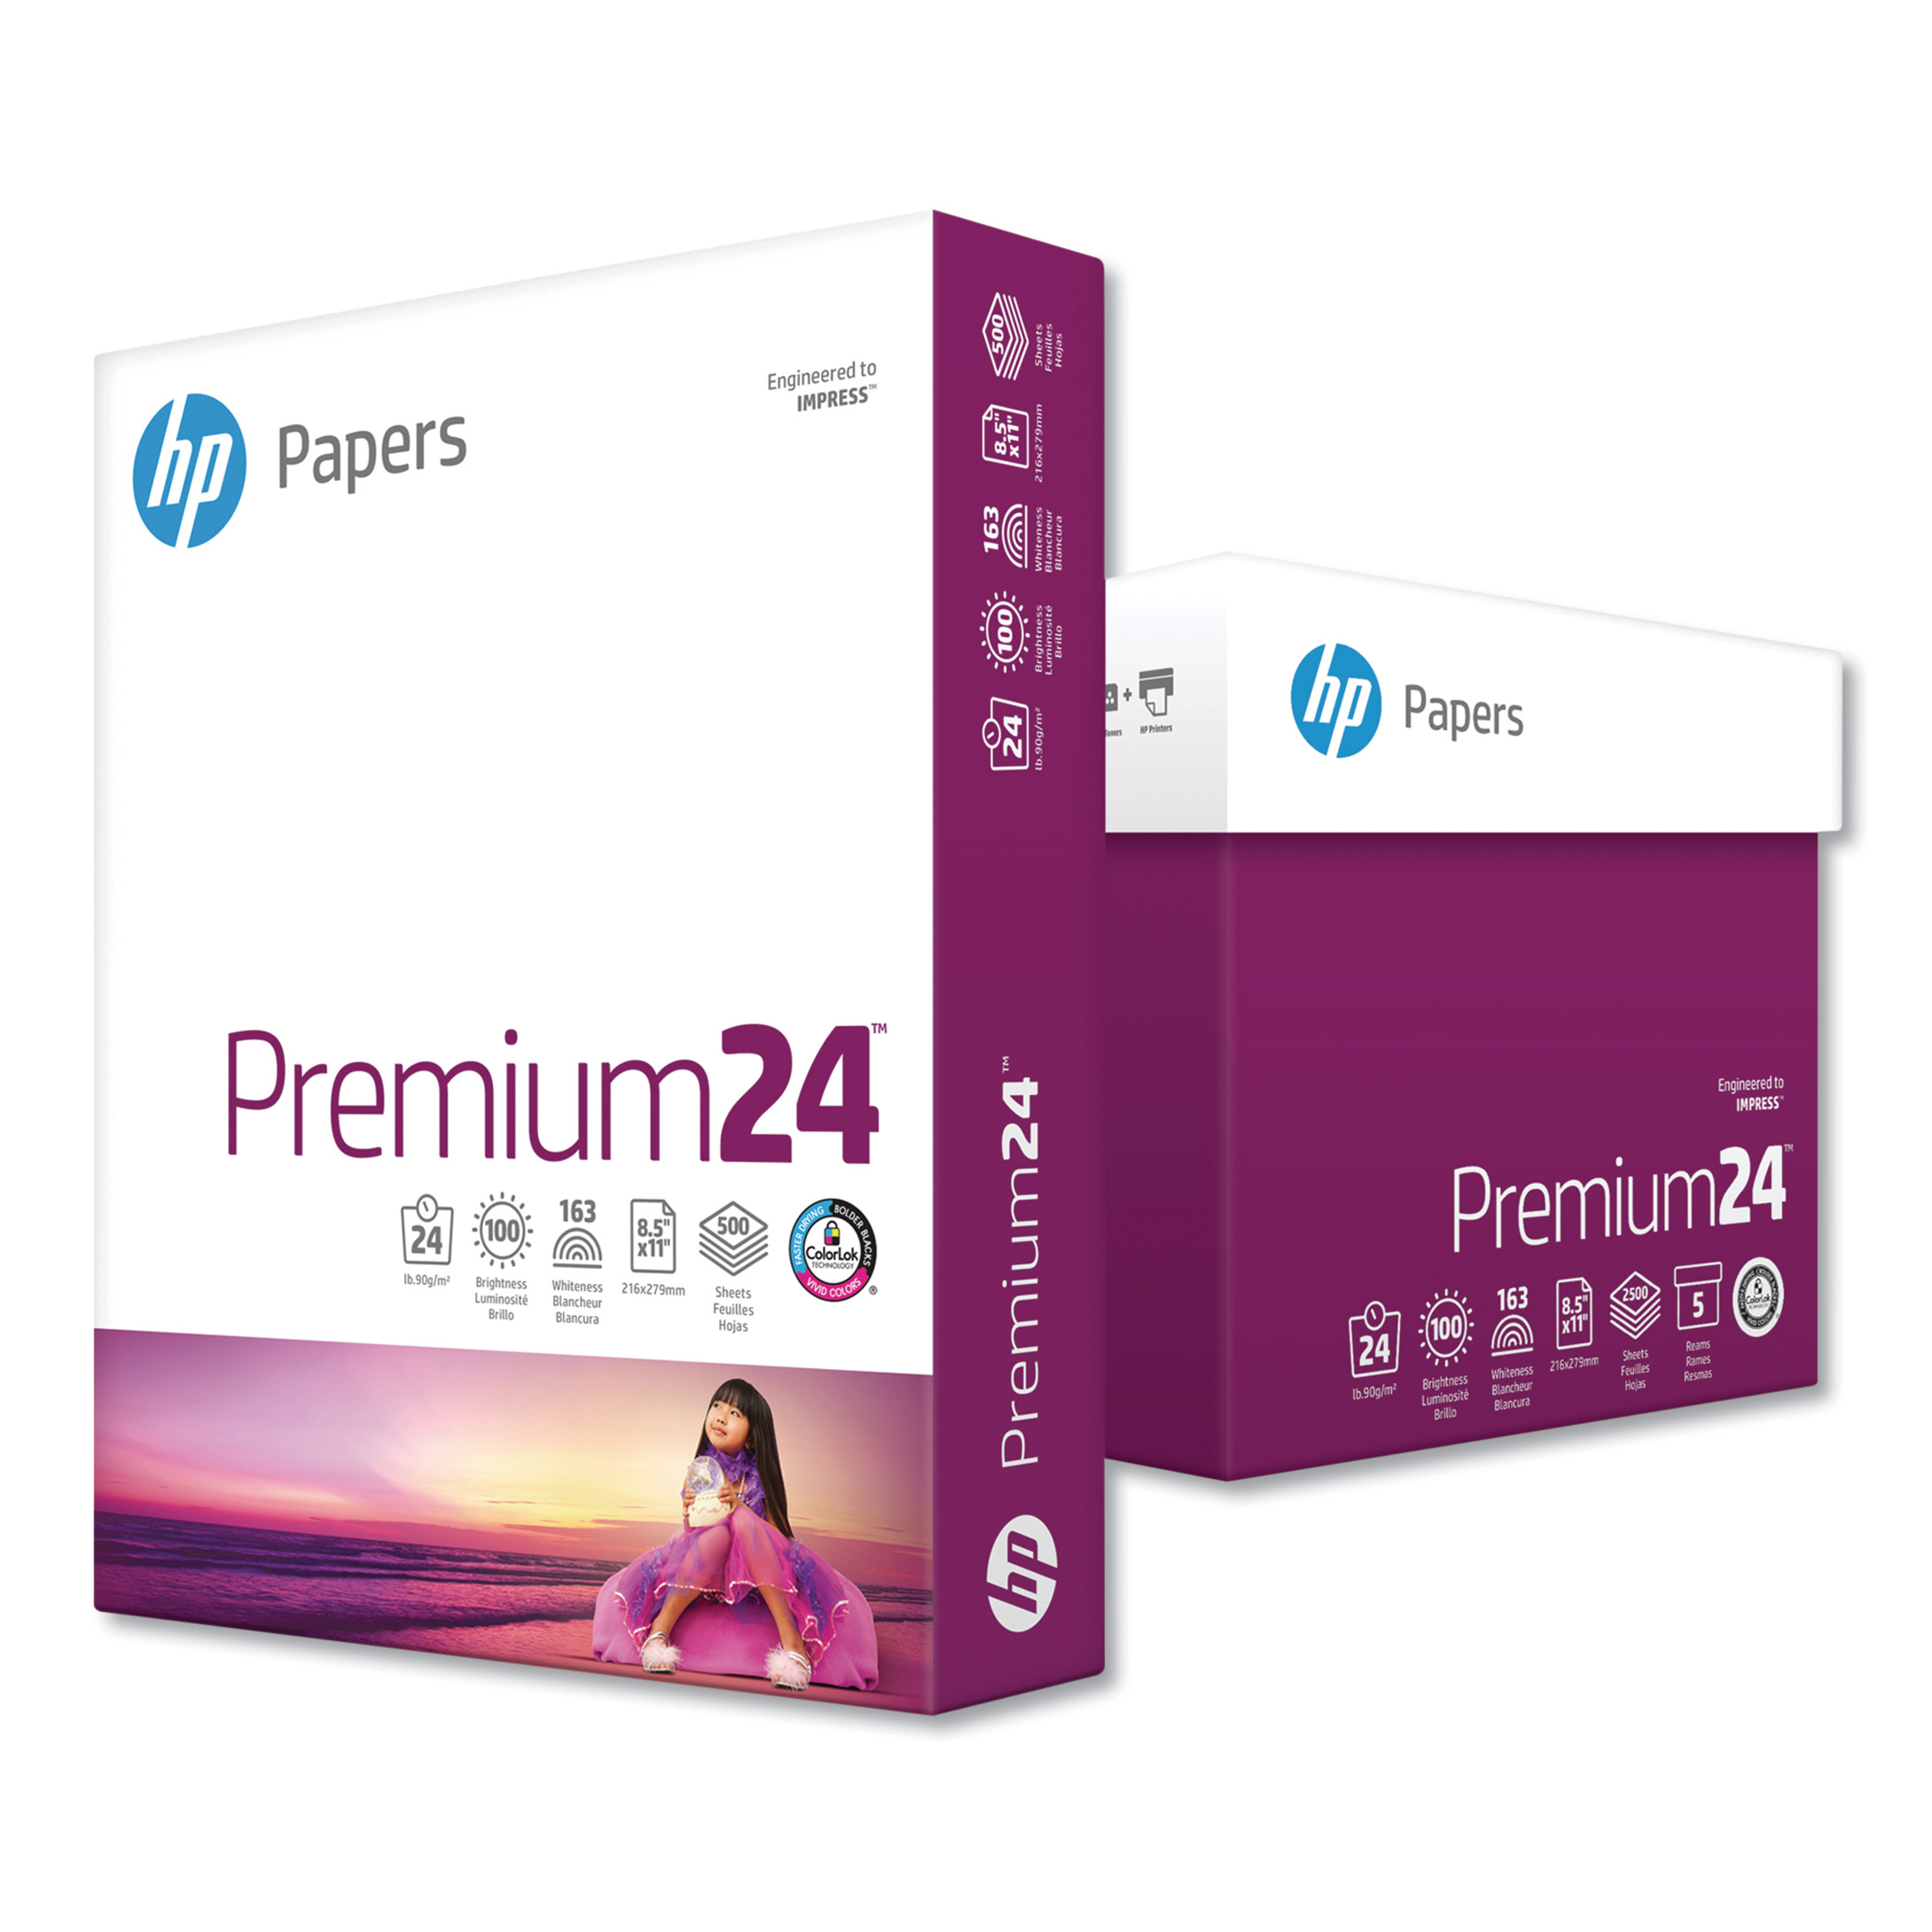  HP Papers 11530-0 Premium24 Paper, 98 Bright, 24lb, 8.5 x 11, Ultra White, 500 Sheets/Ream, 5 Reams/Carton (HEW115300) 